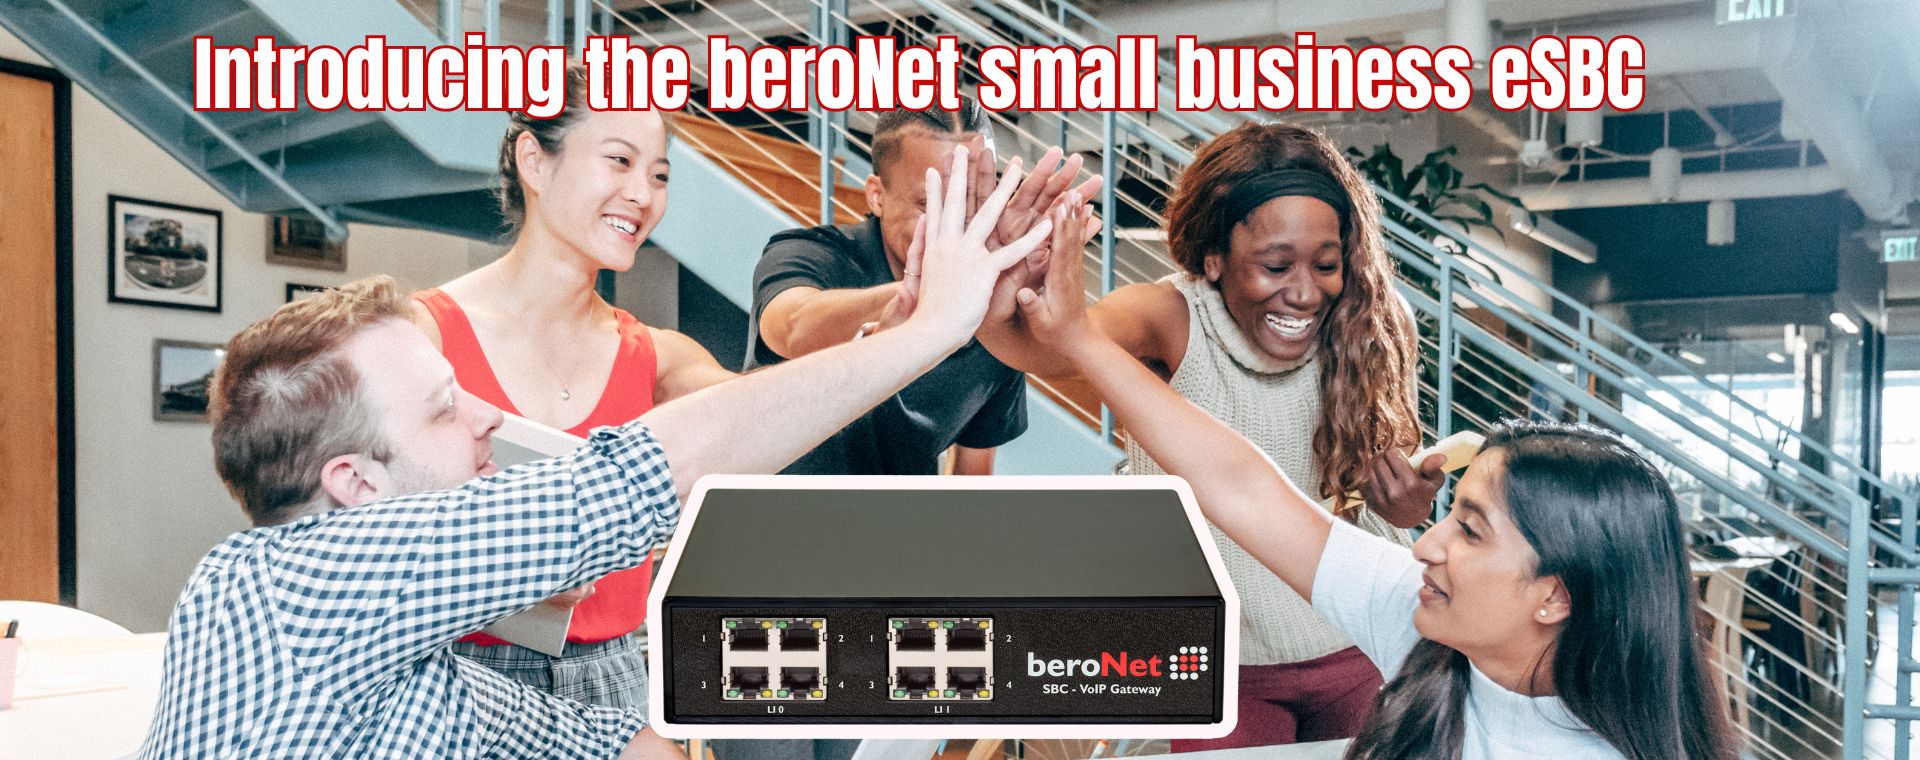 beroNet Small business E-SBC 